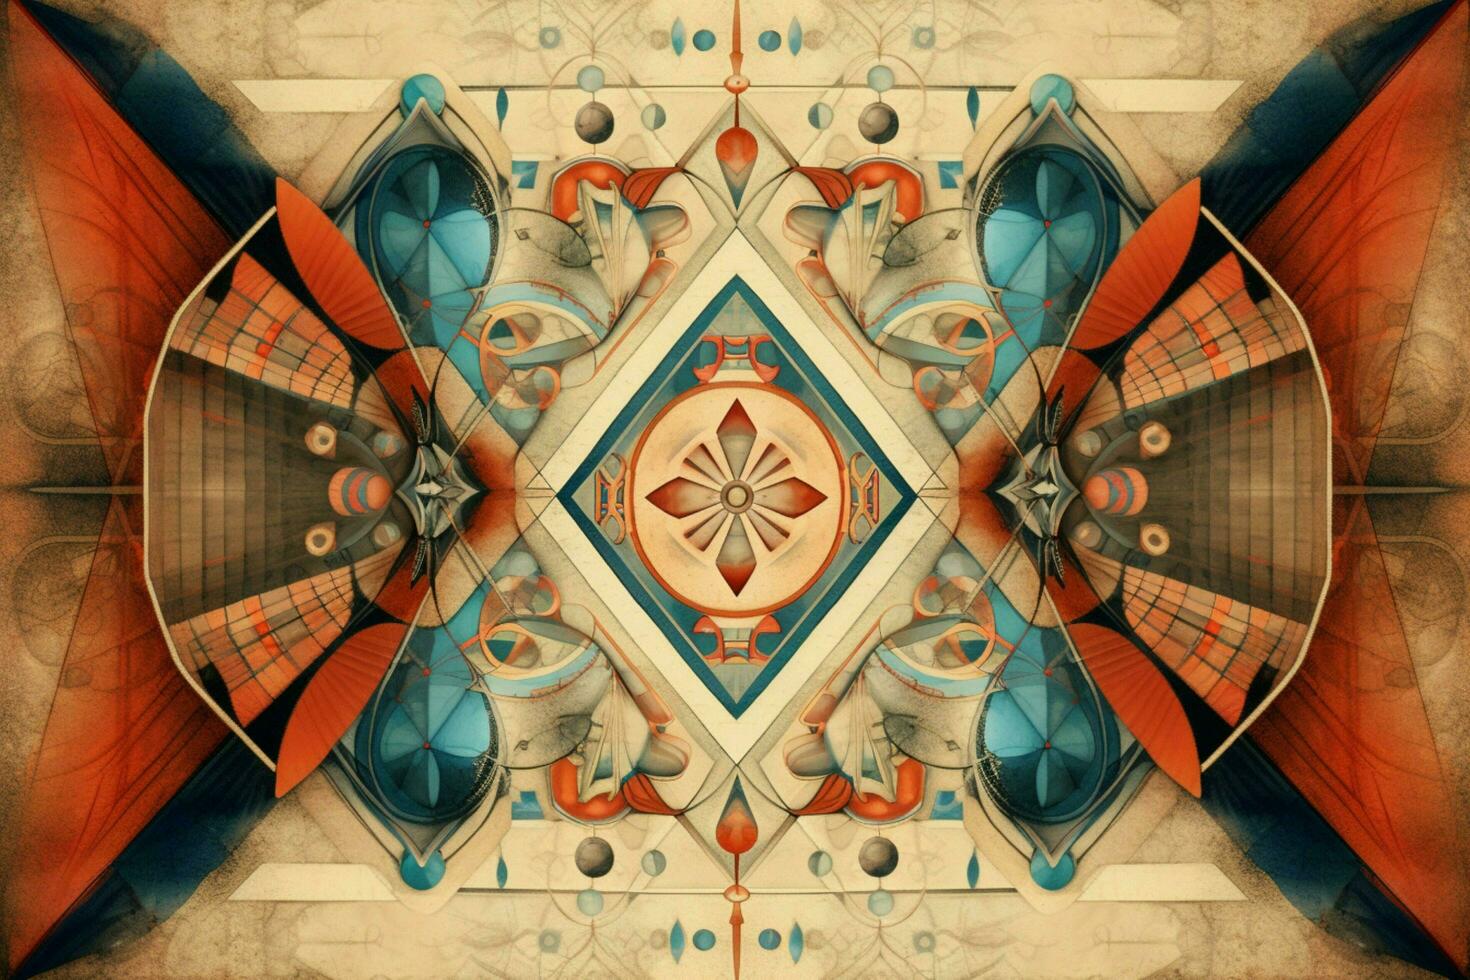 Symmetrical designs conveying balance and harmony photo